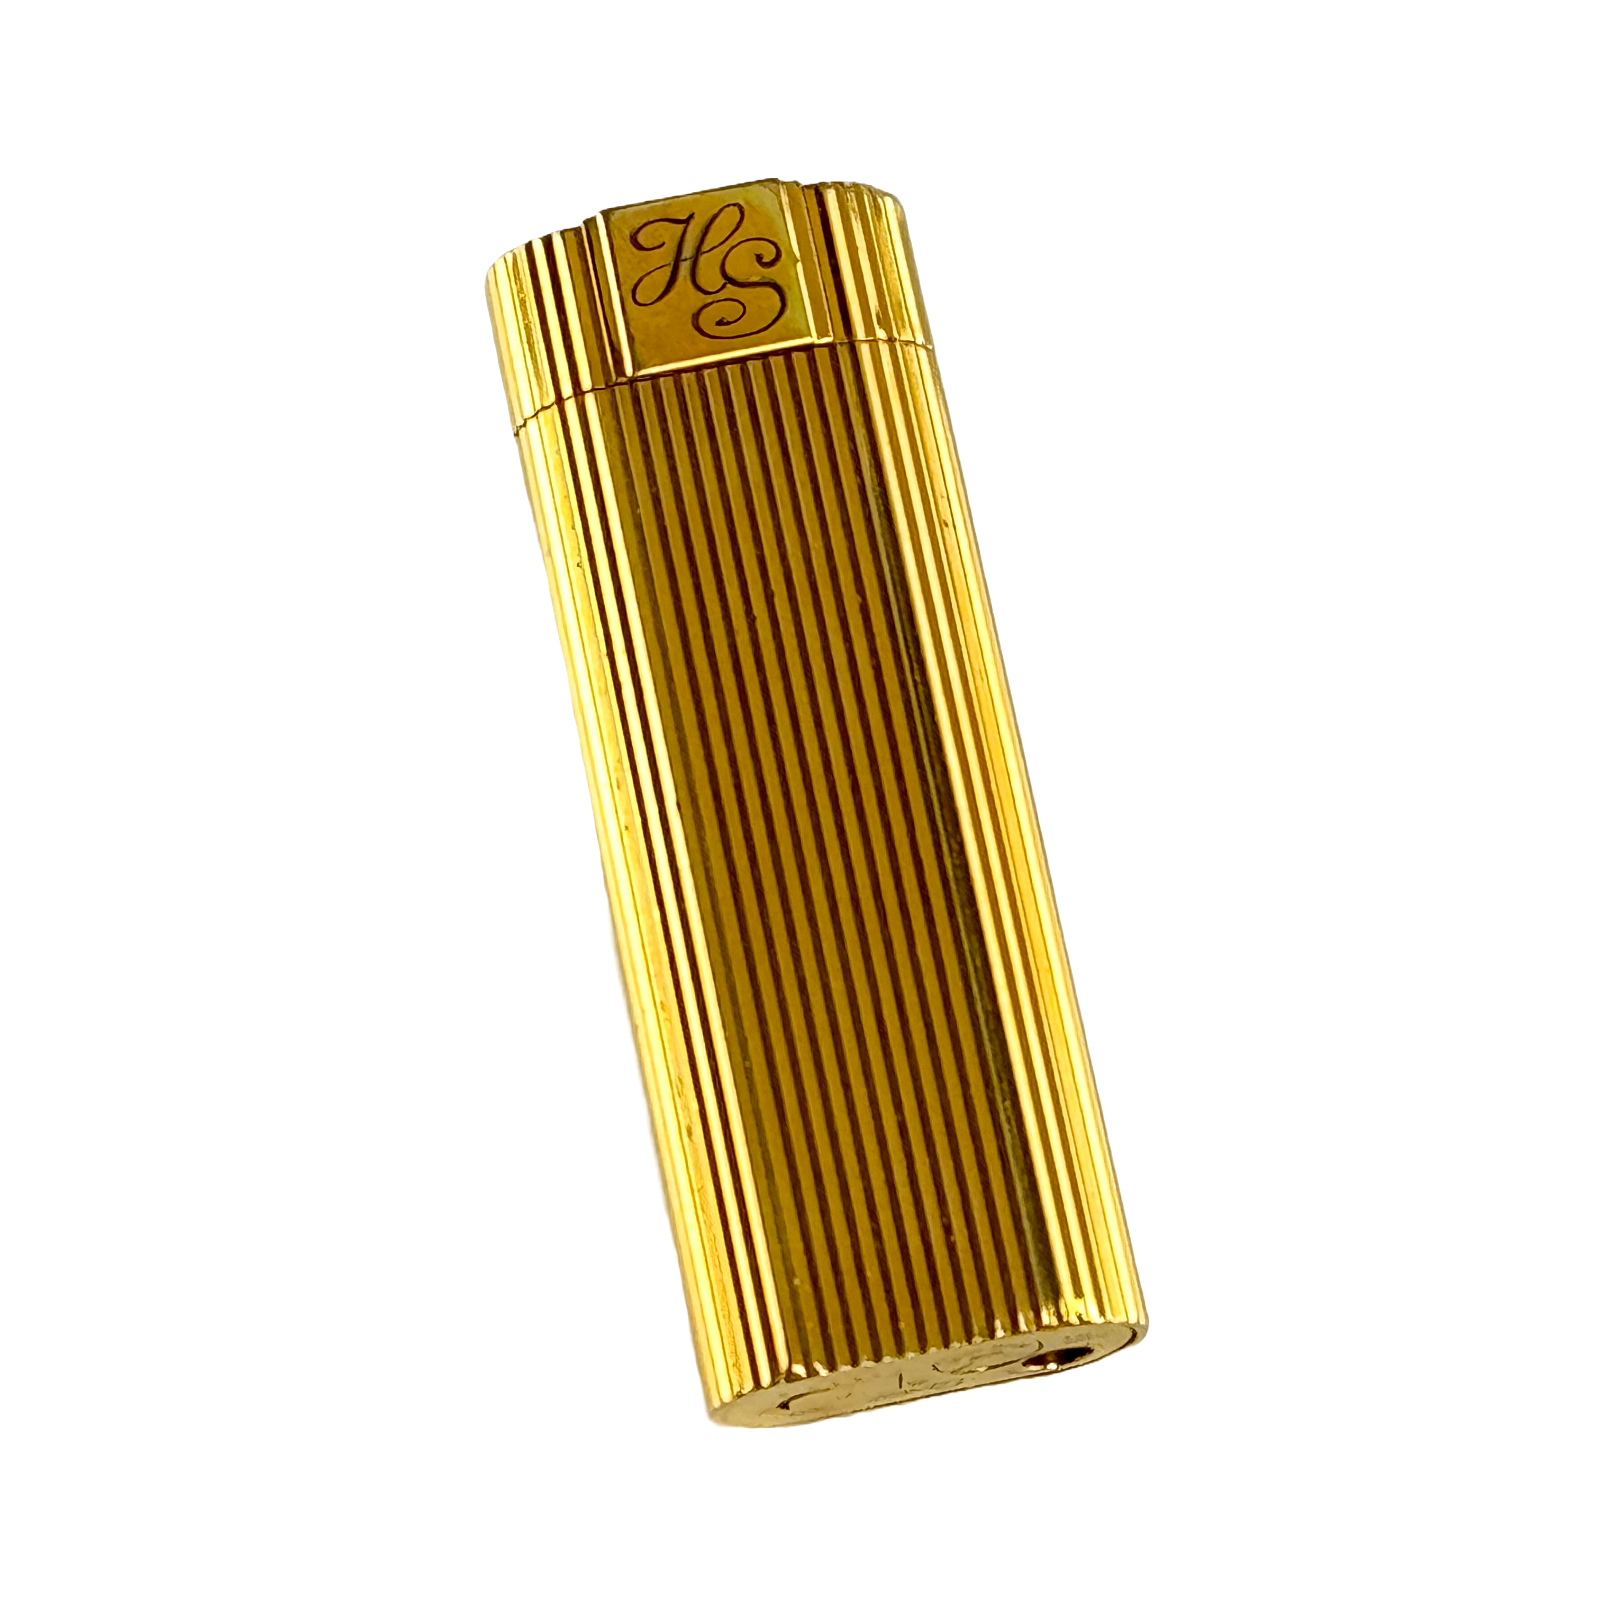  Must de Cartier Paris vintage Feuerzeug Lighter Gold funktionsfähig